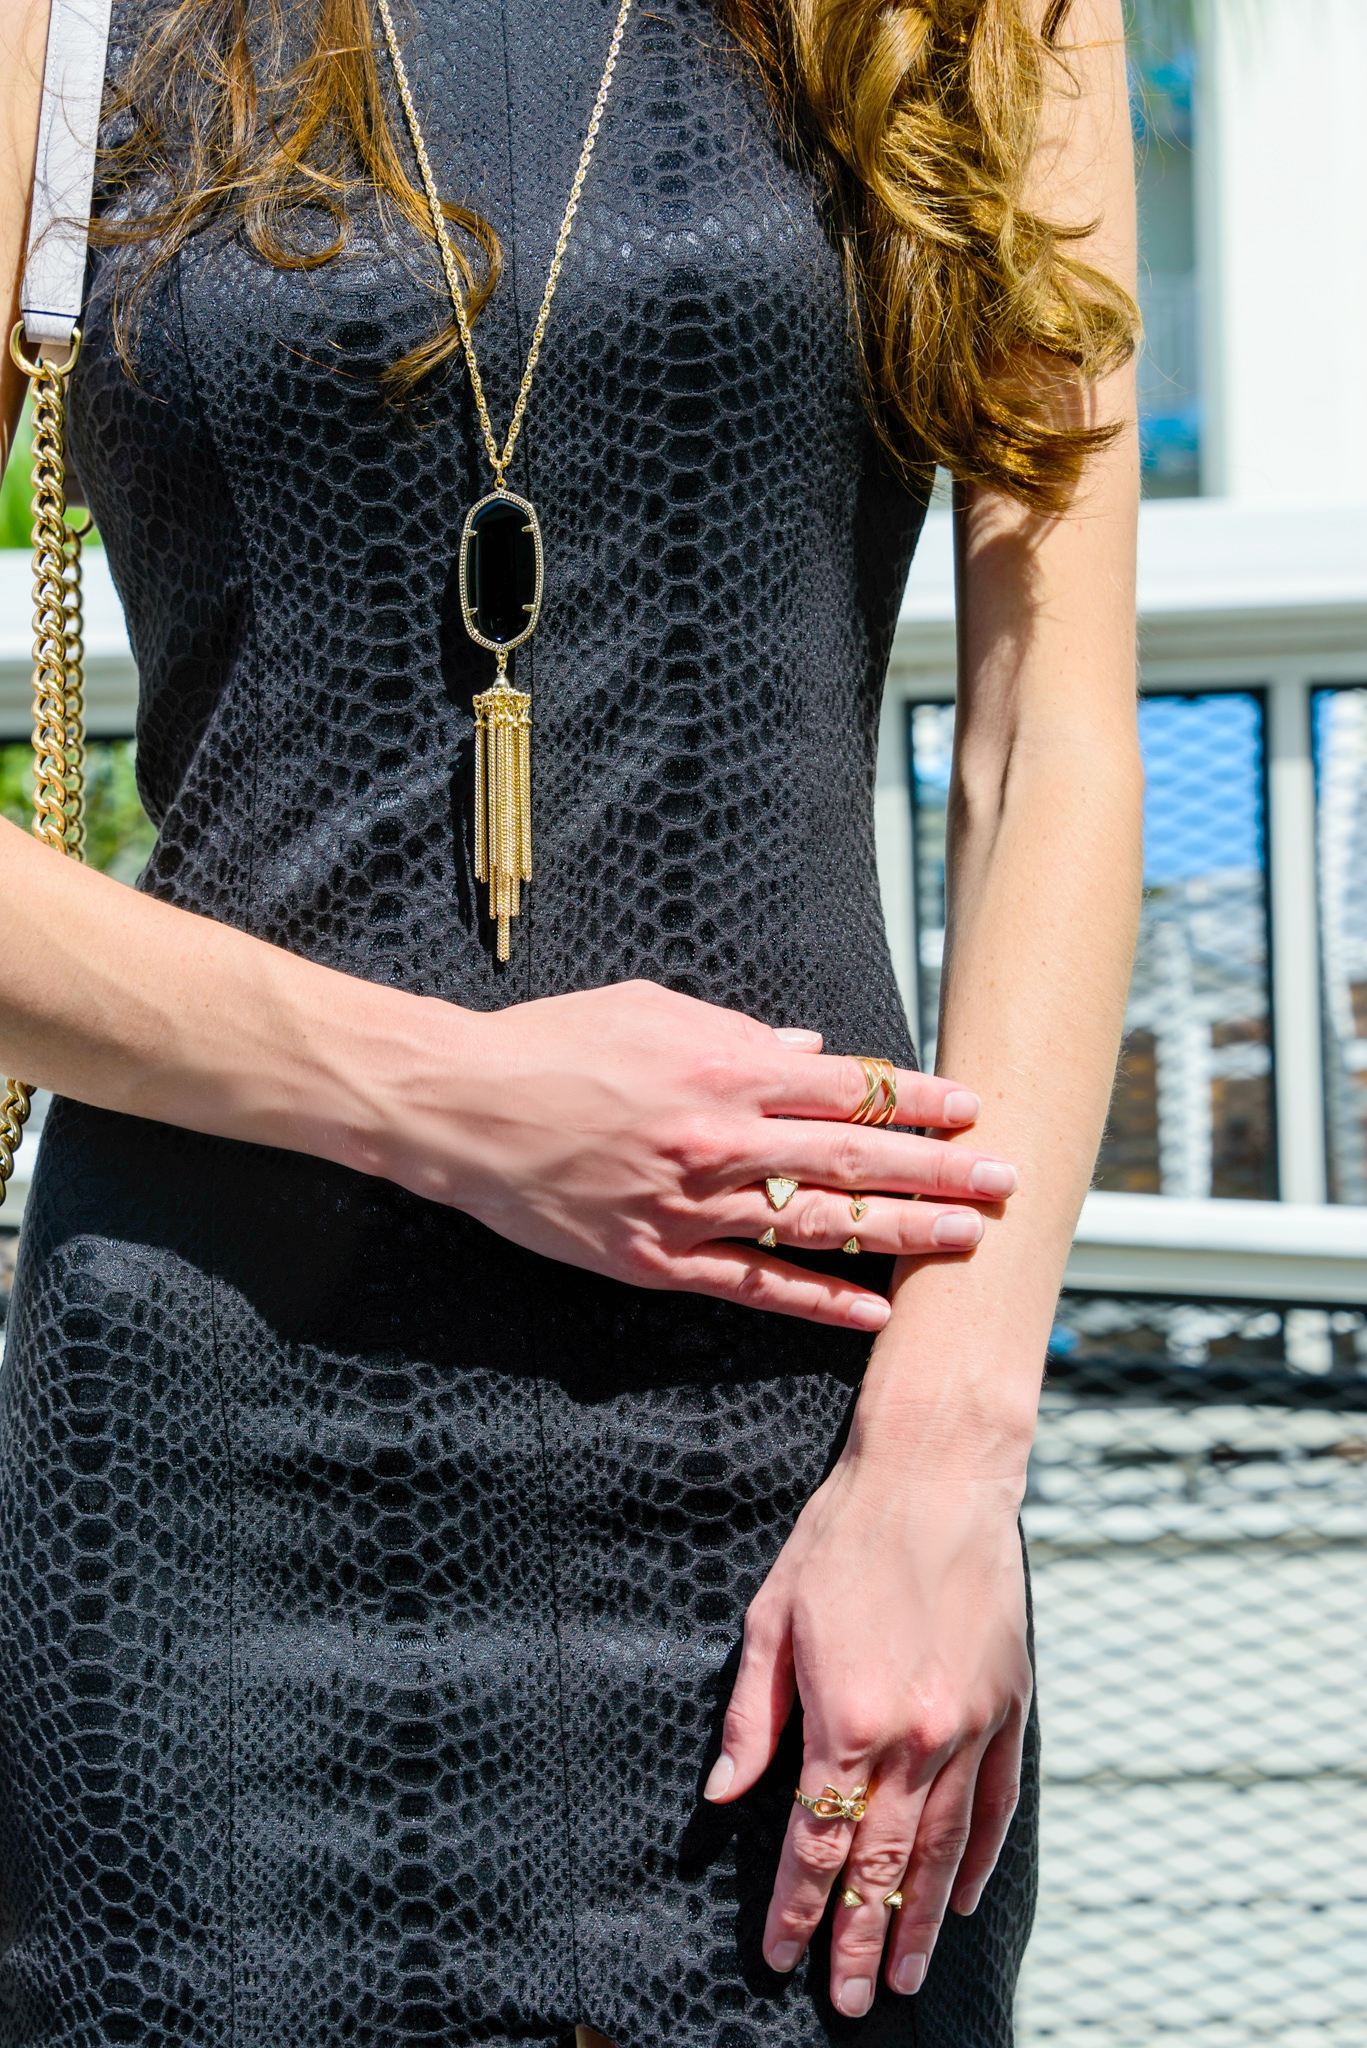 Inspiration for NYFW: Shilla Black Snakeskin Dress by fashion blogger Stephanie Ziajka from Diary of a Debutante